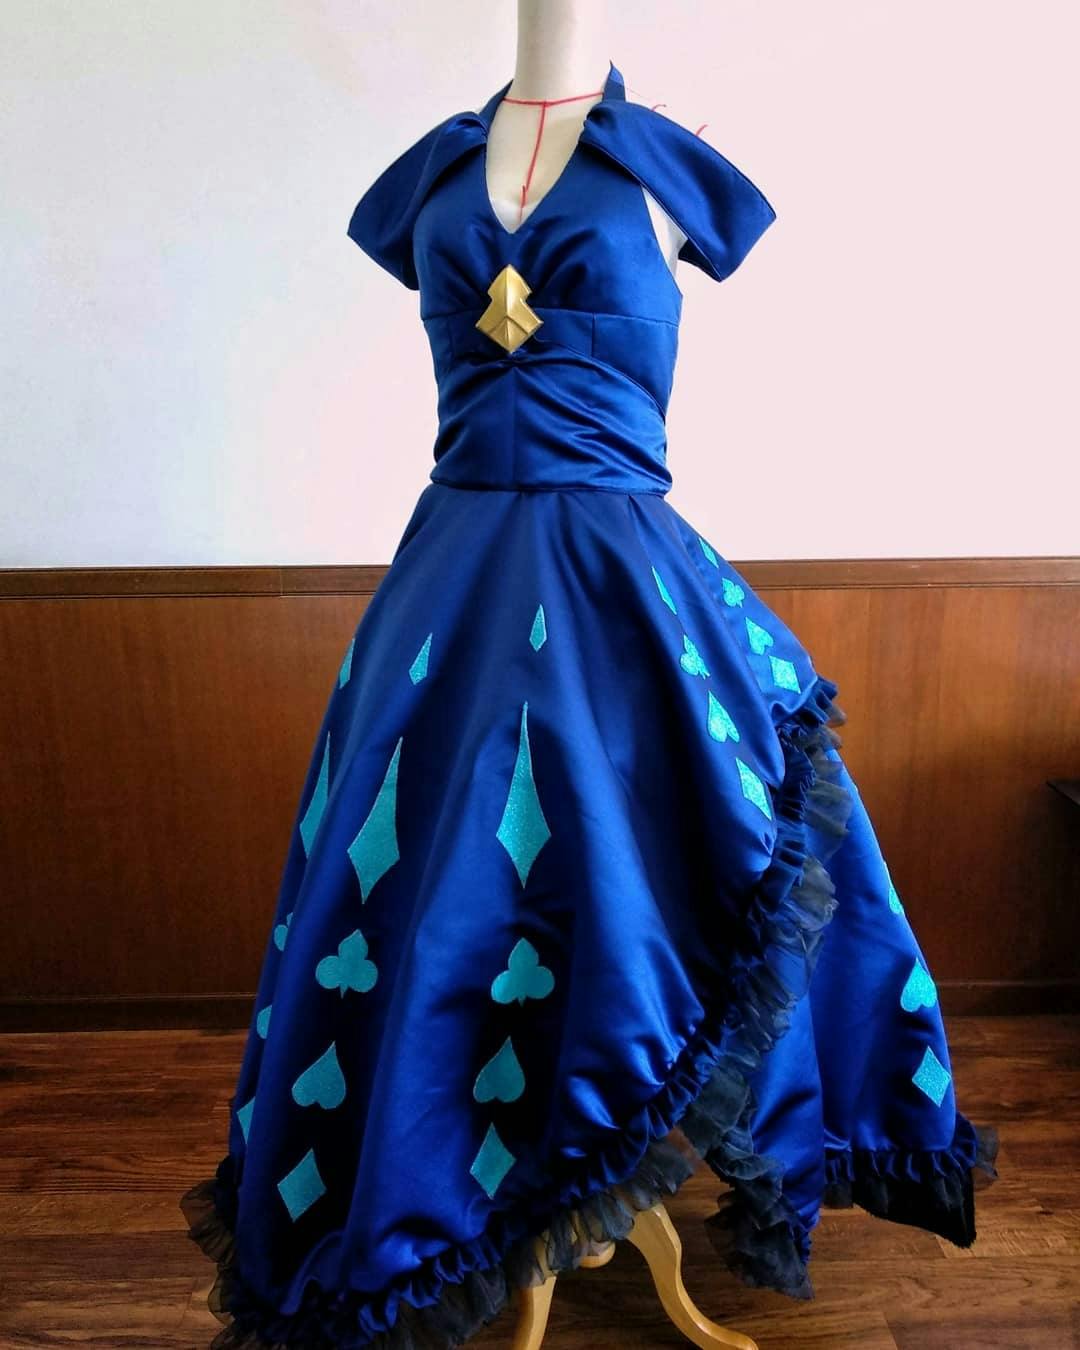 Katalina dress from Granblue Fantasy made by Astelier Studios.